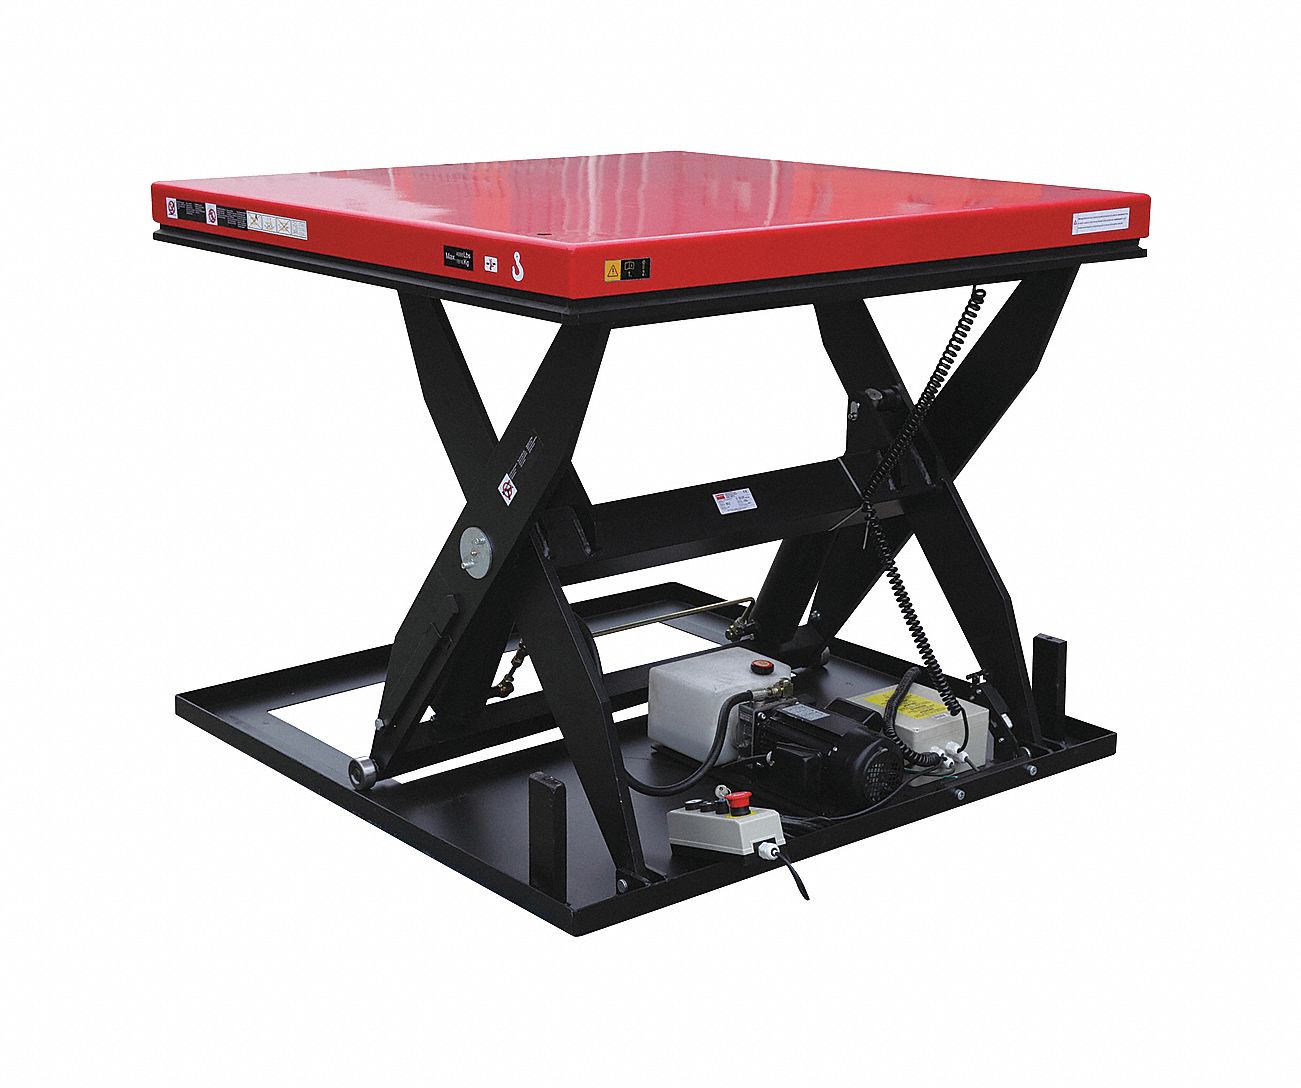 Dayton 60nh58 Scissor Lift Table 5000 Lbs Load Capacity 48 Inch